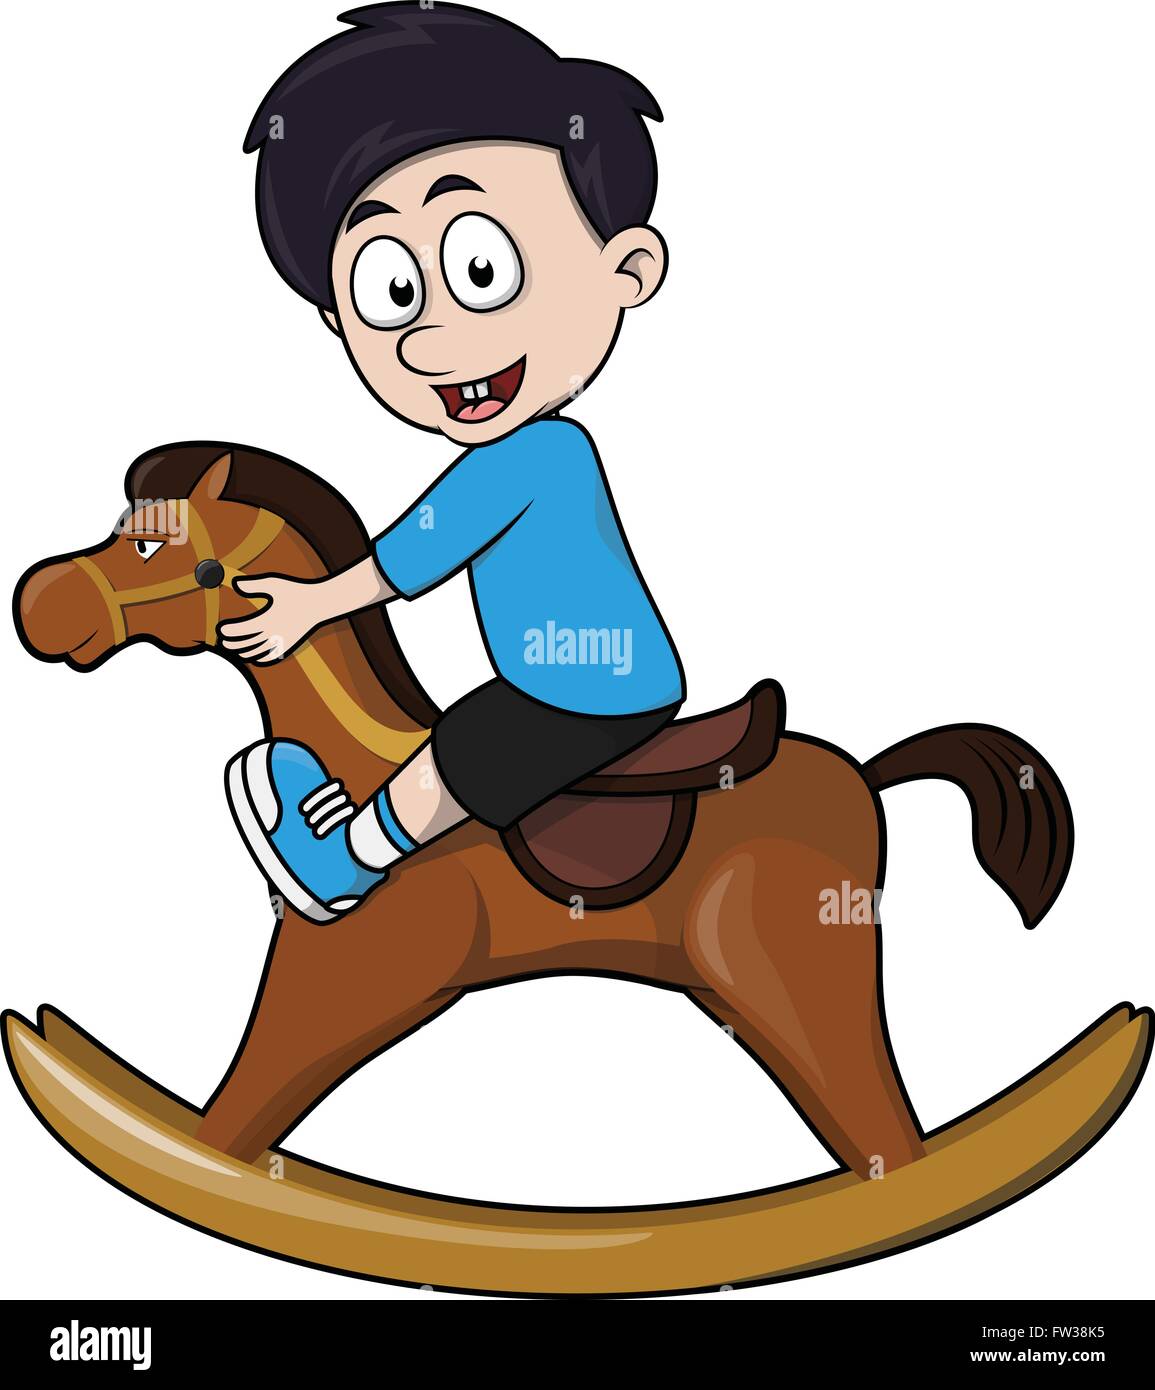 boy ride horse cartoon illustration Stock Vector Image & Art - Alamy